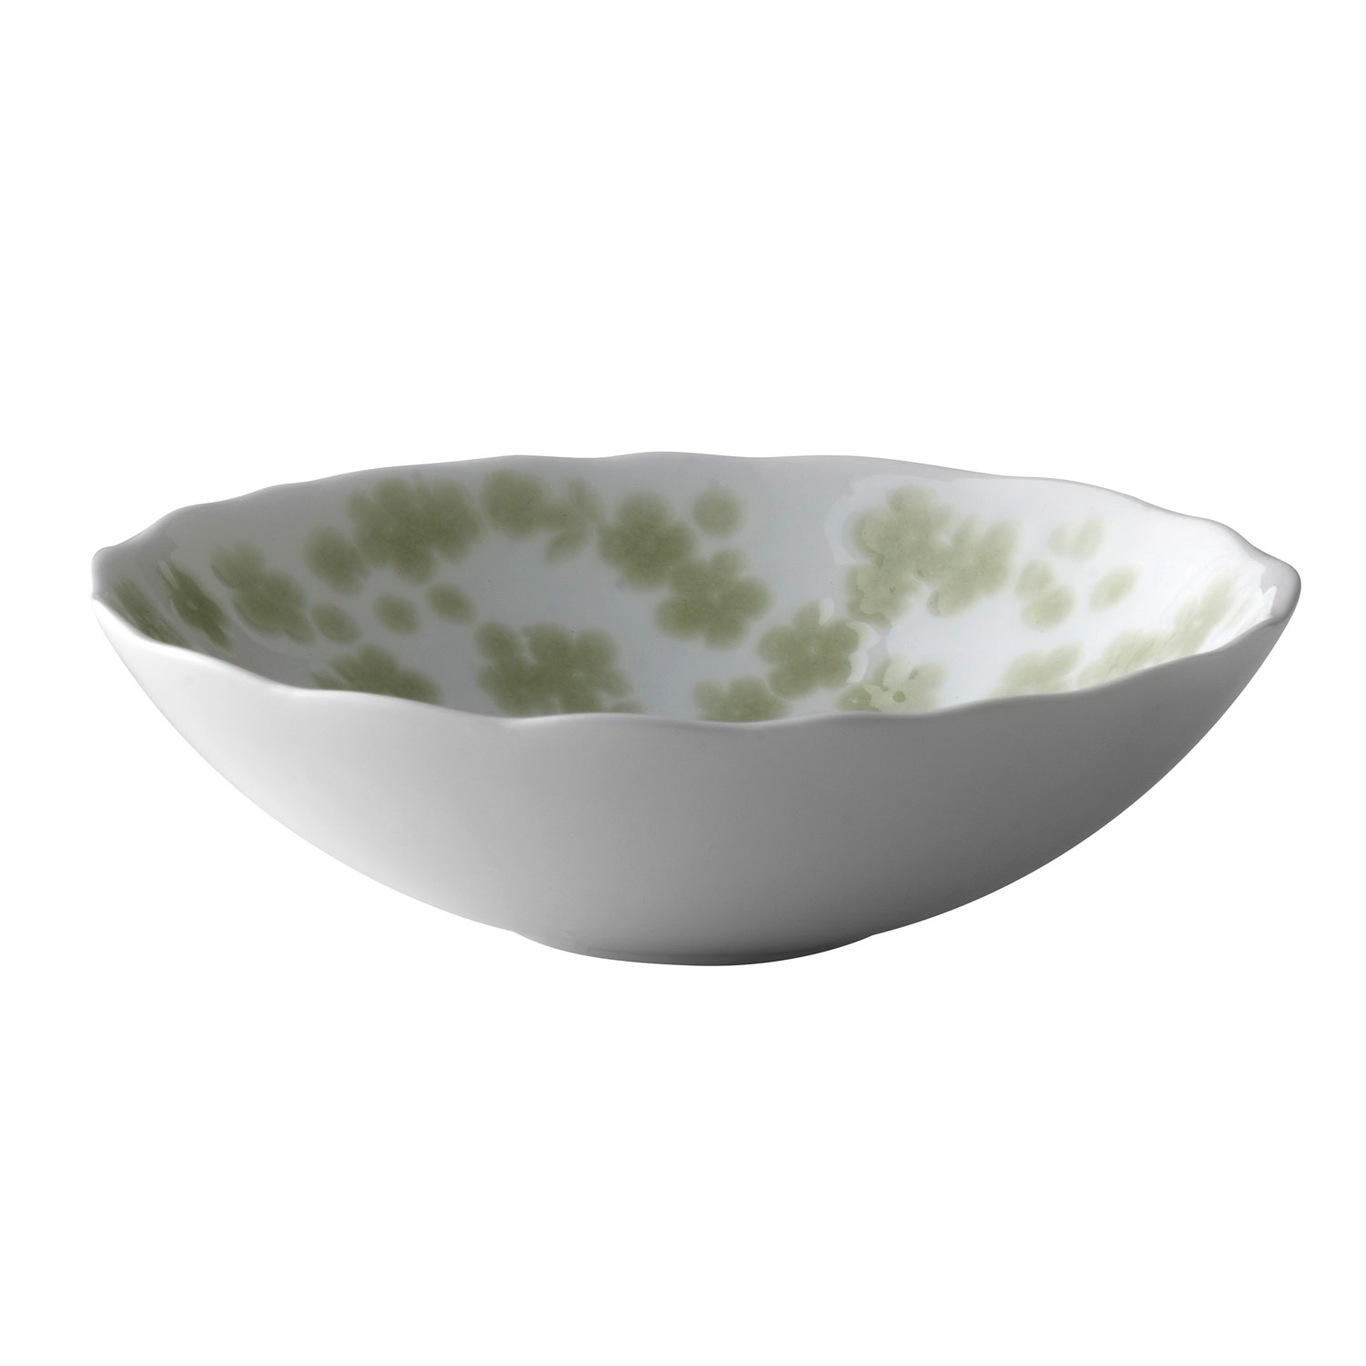 Slåpeblom Bowl 12 cm, Green